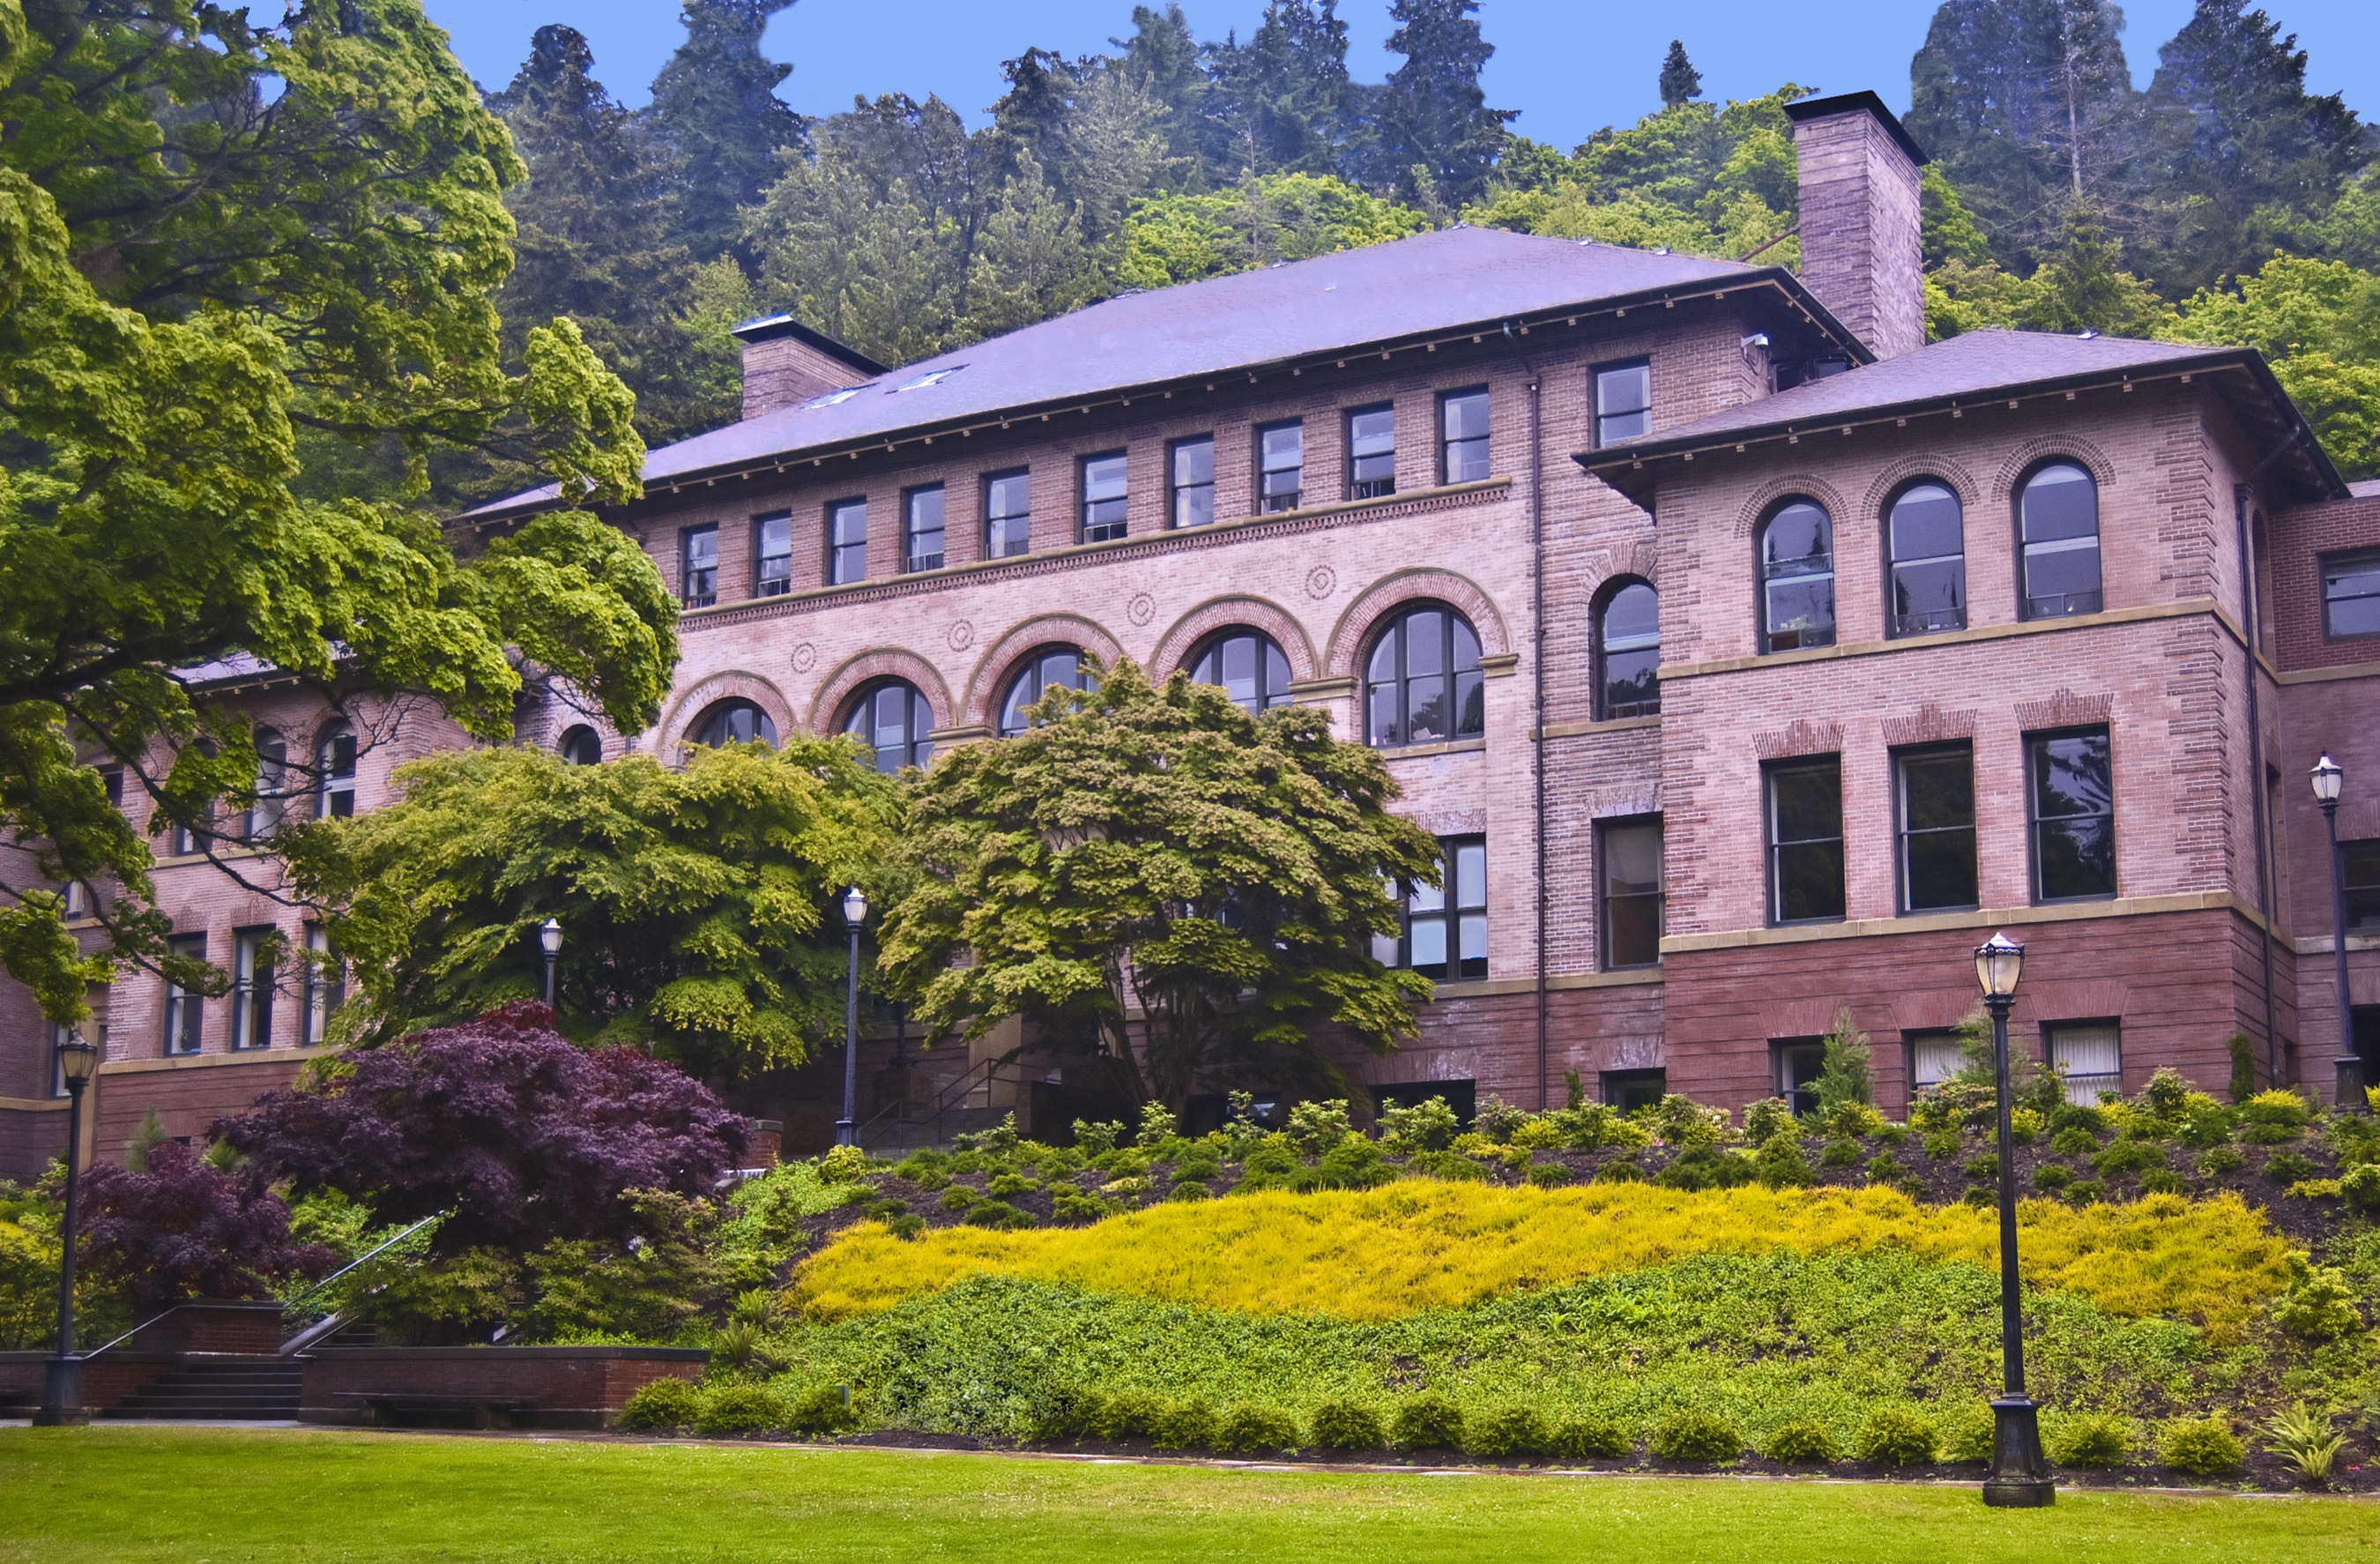 Photo of the Old Main Hall at Western Washington University